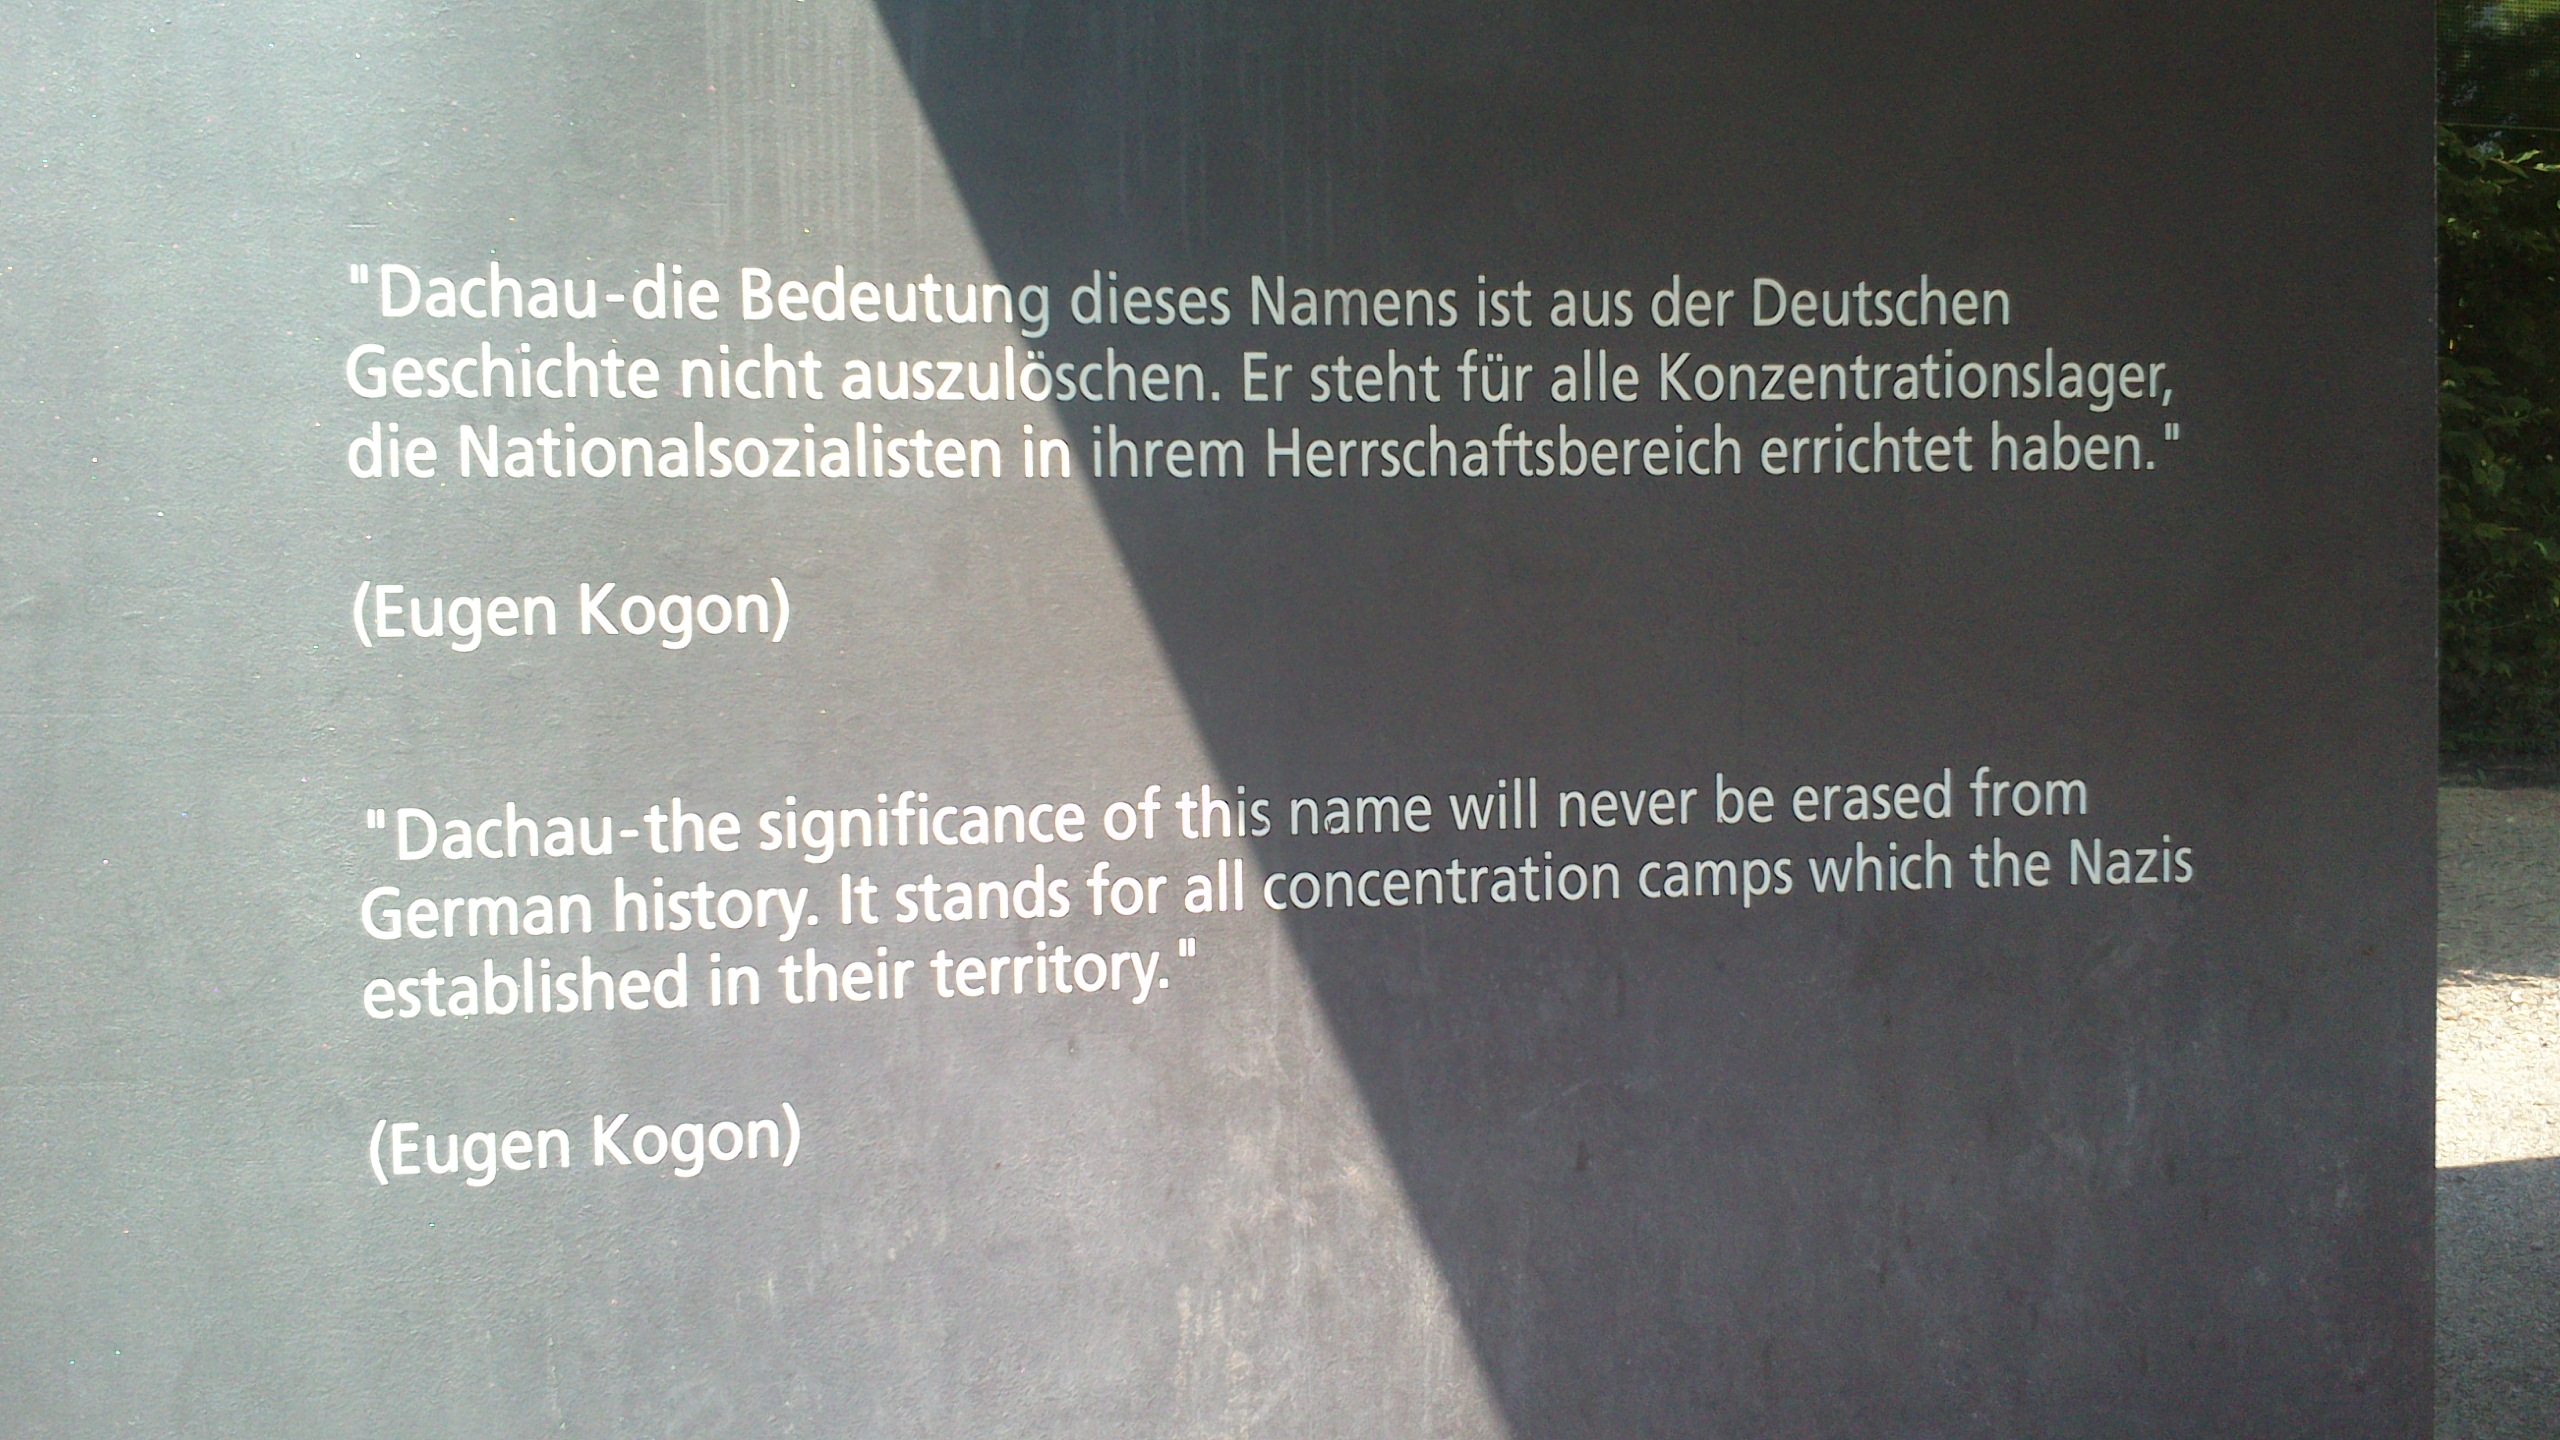 Kogon Zitat at Dachau Concentration Camp | Munich Experience by Franz Schega